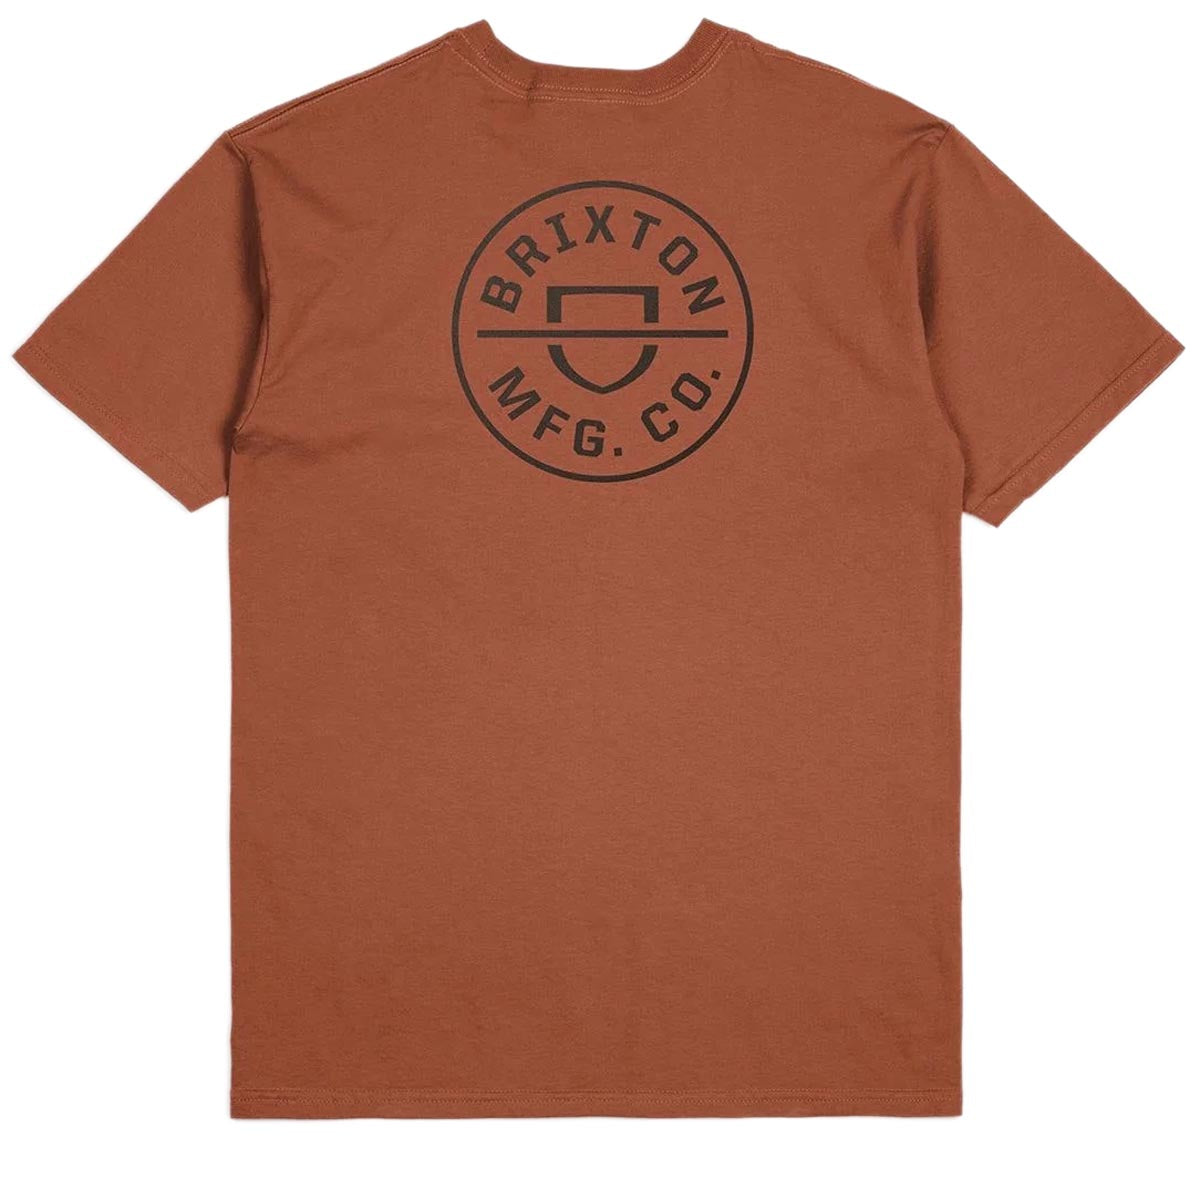 Brixton Crest II T-Shirt - Terracotta/Washed Black image 1